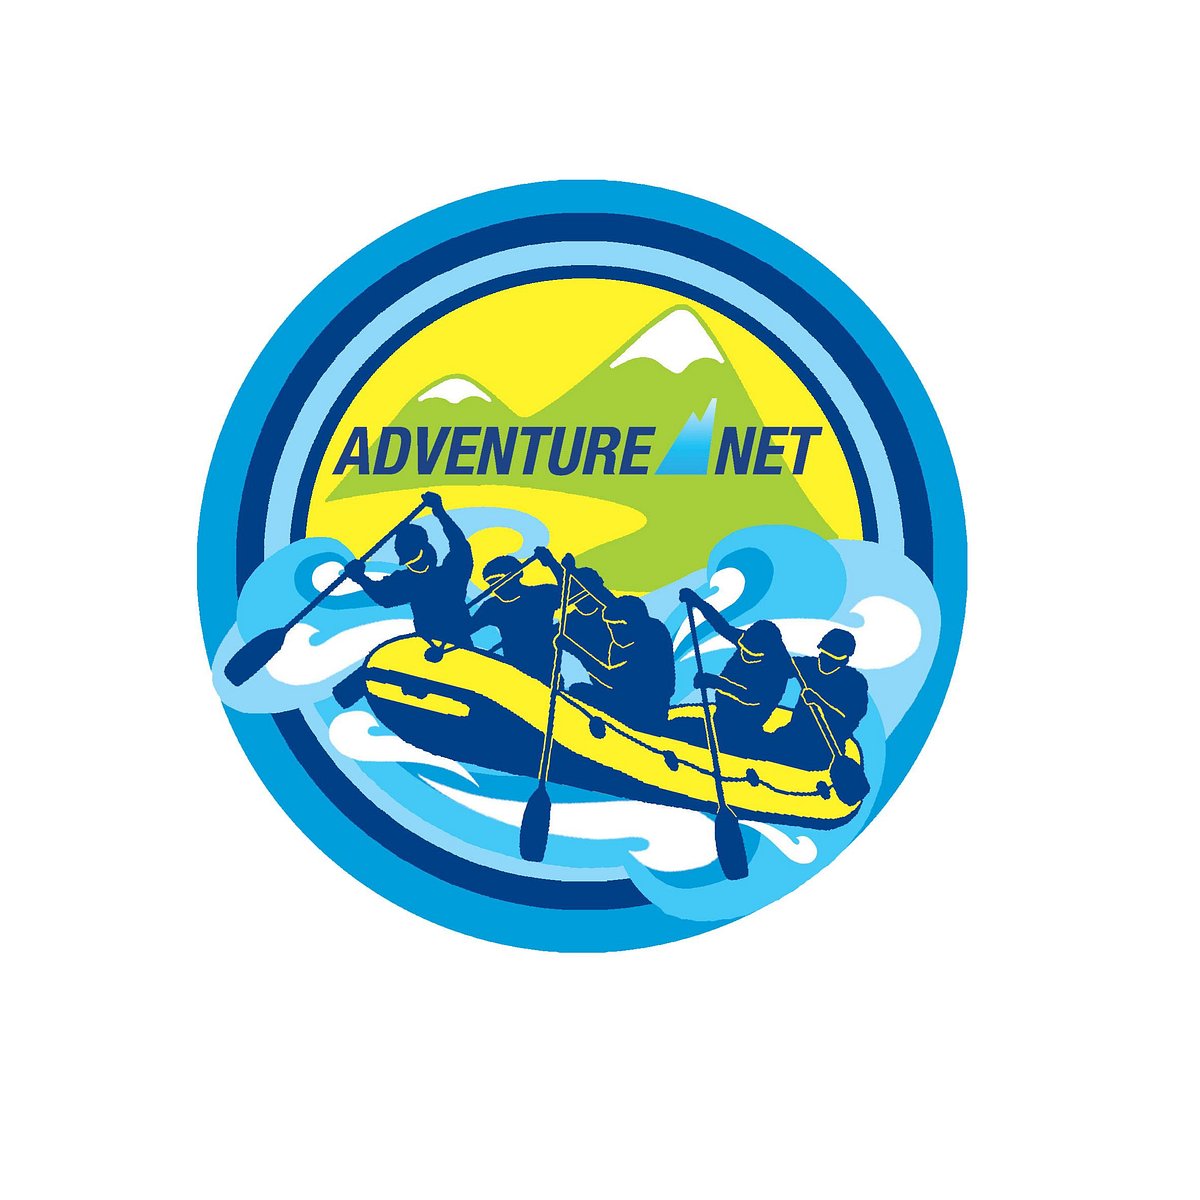 Adventure net